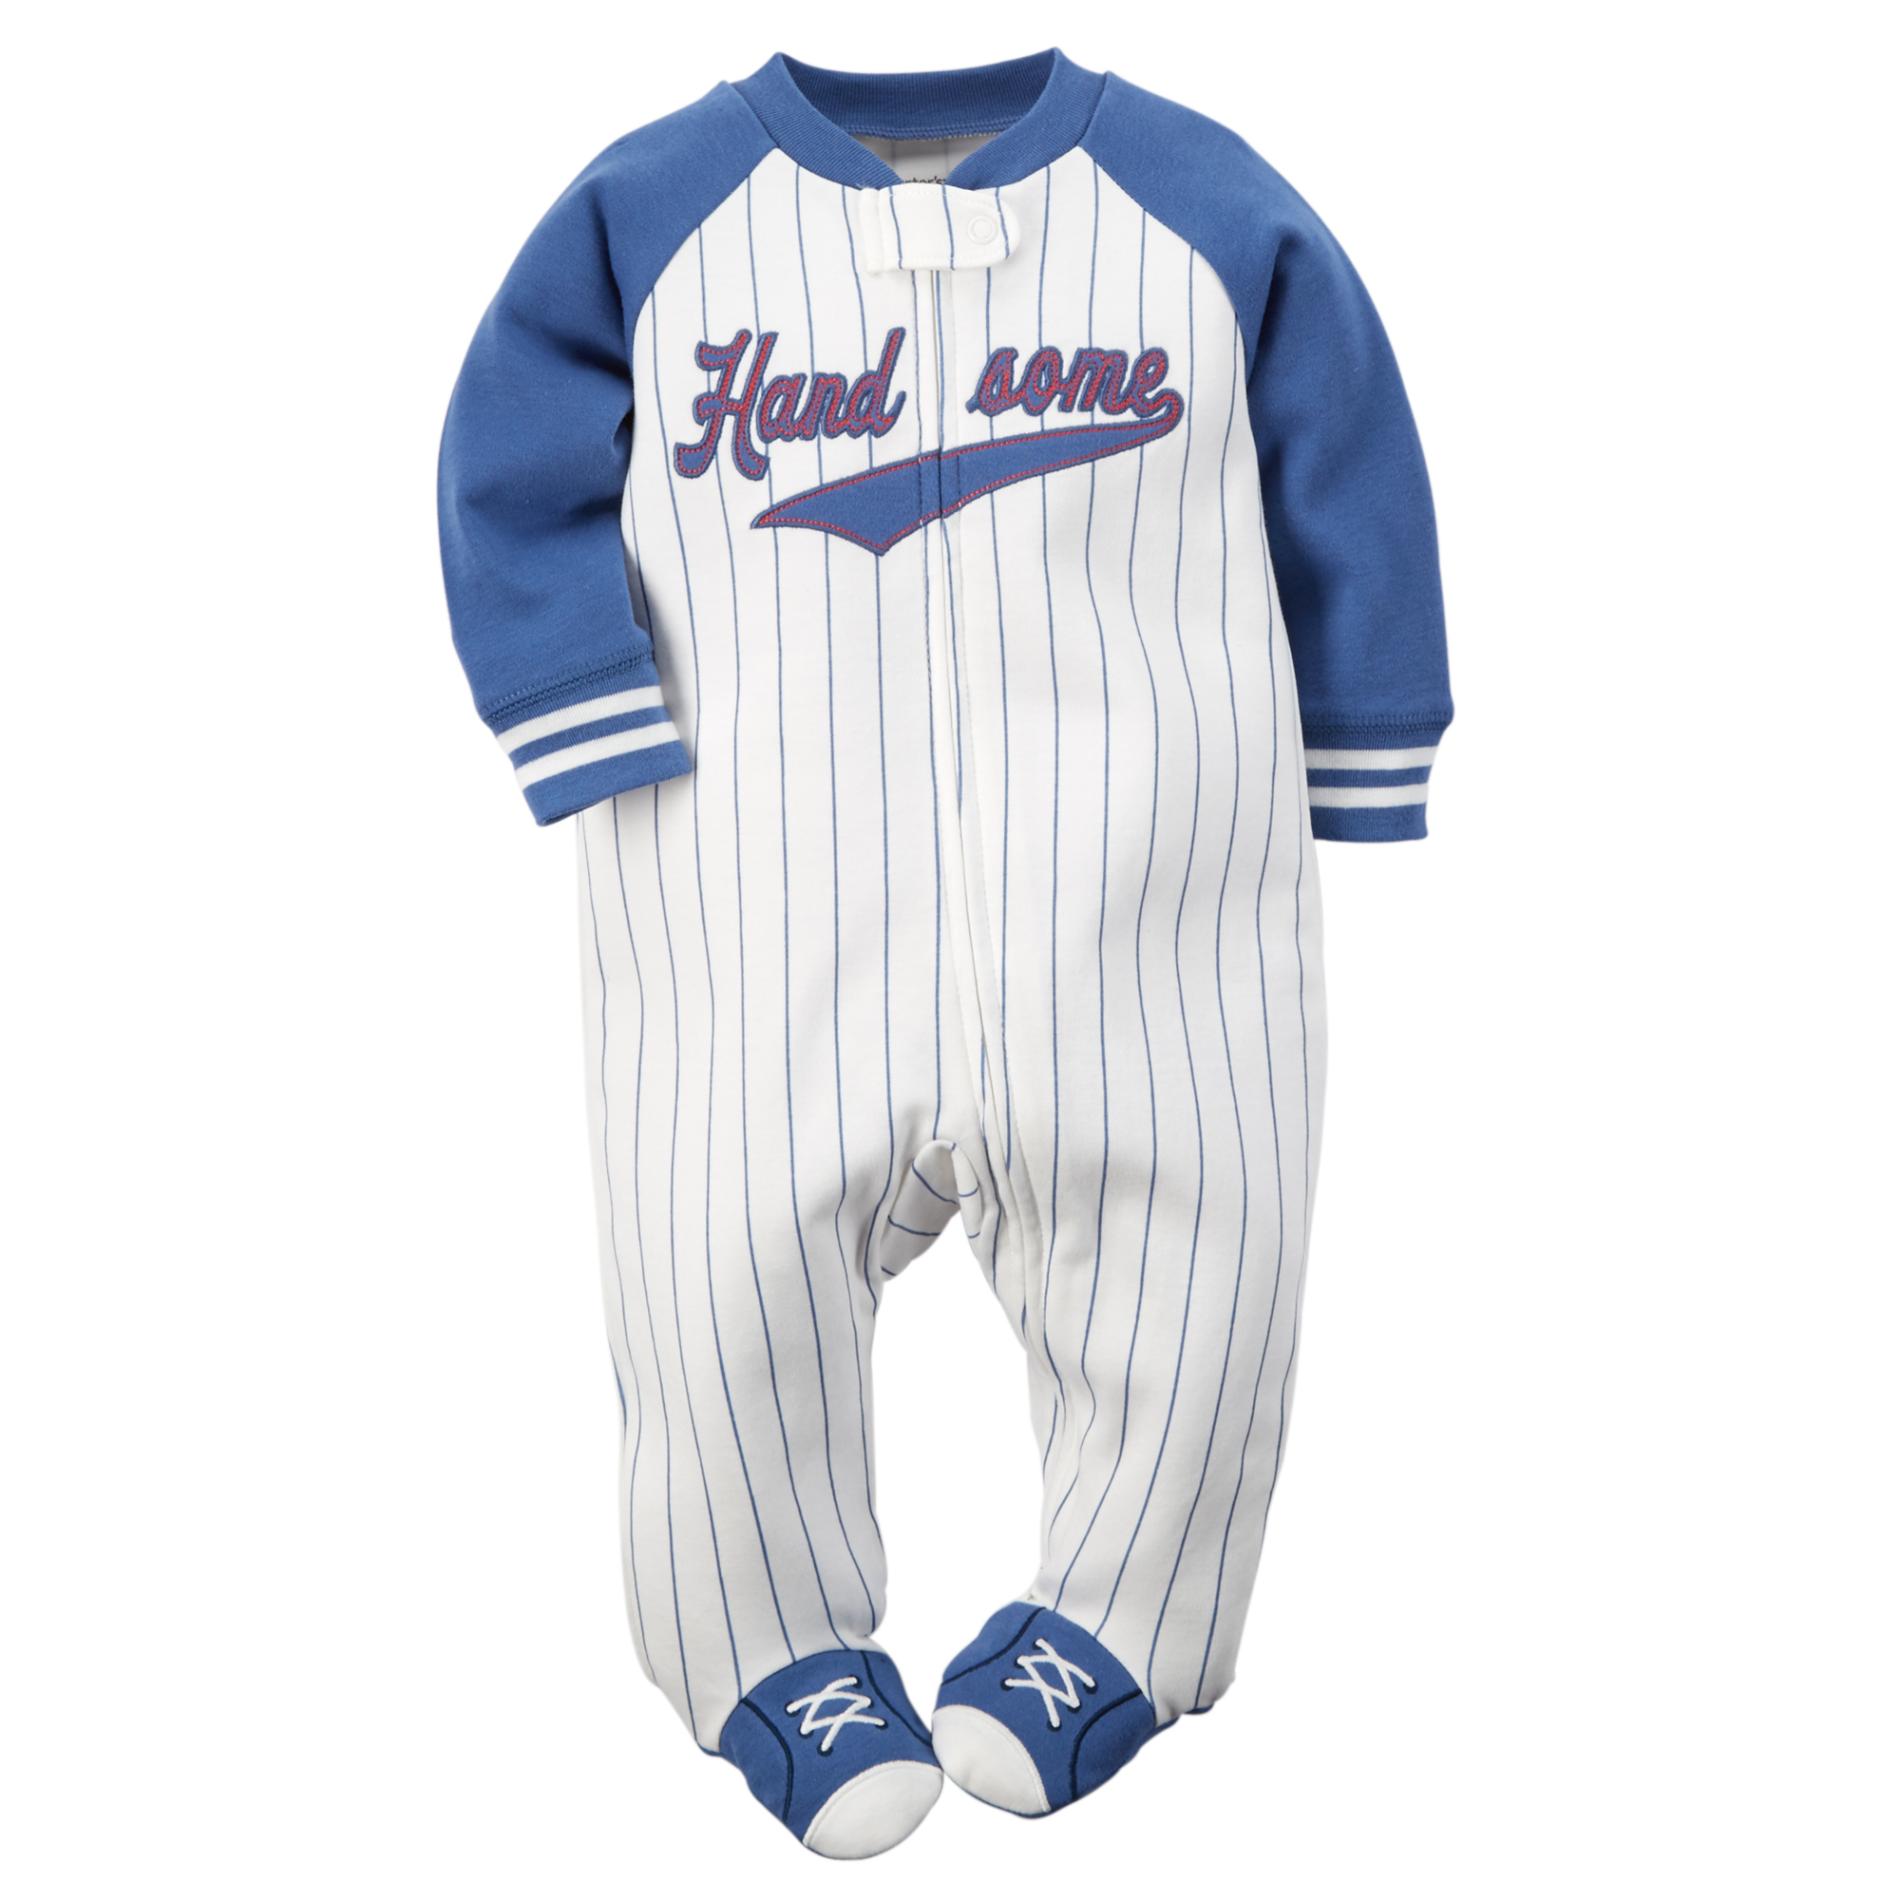 Carter's Newborn Boy's Footed Pajamas - Baseball Uniform